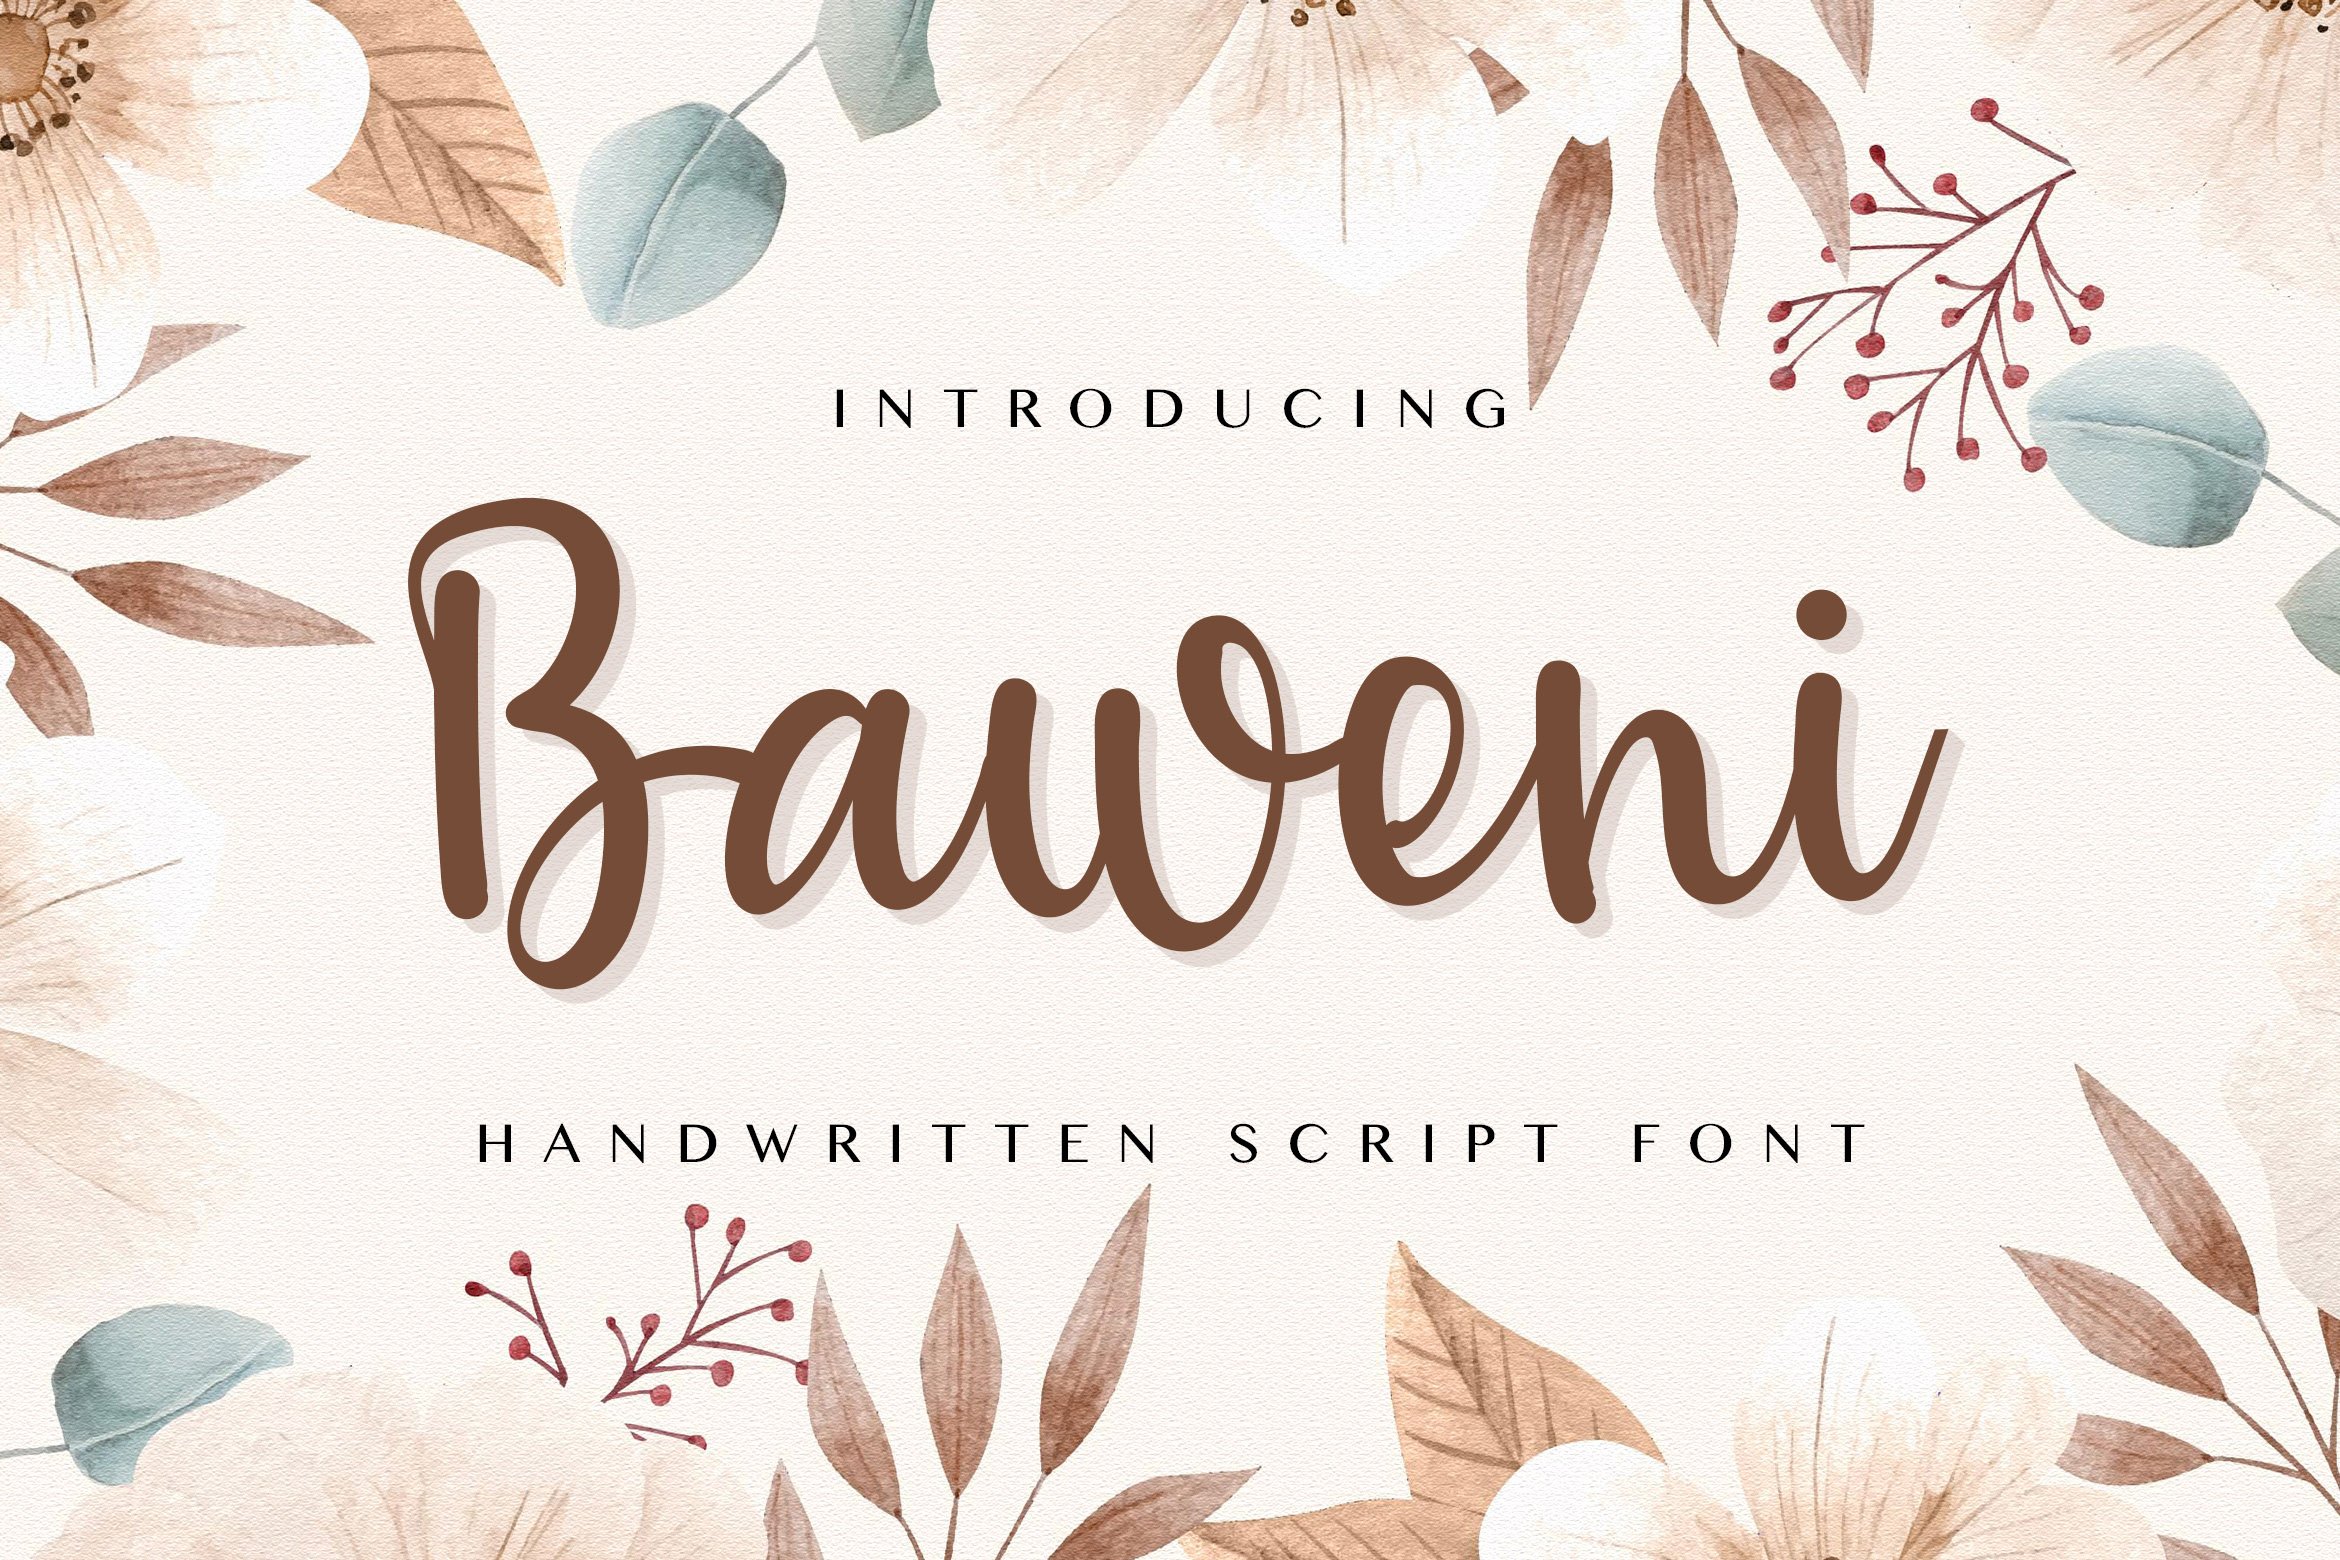 Baweni - Handwritten Script Font cover image.